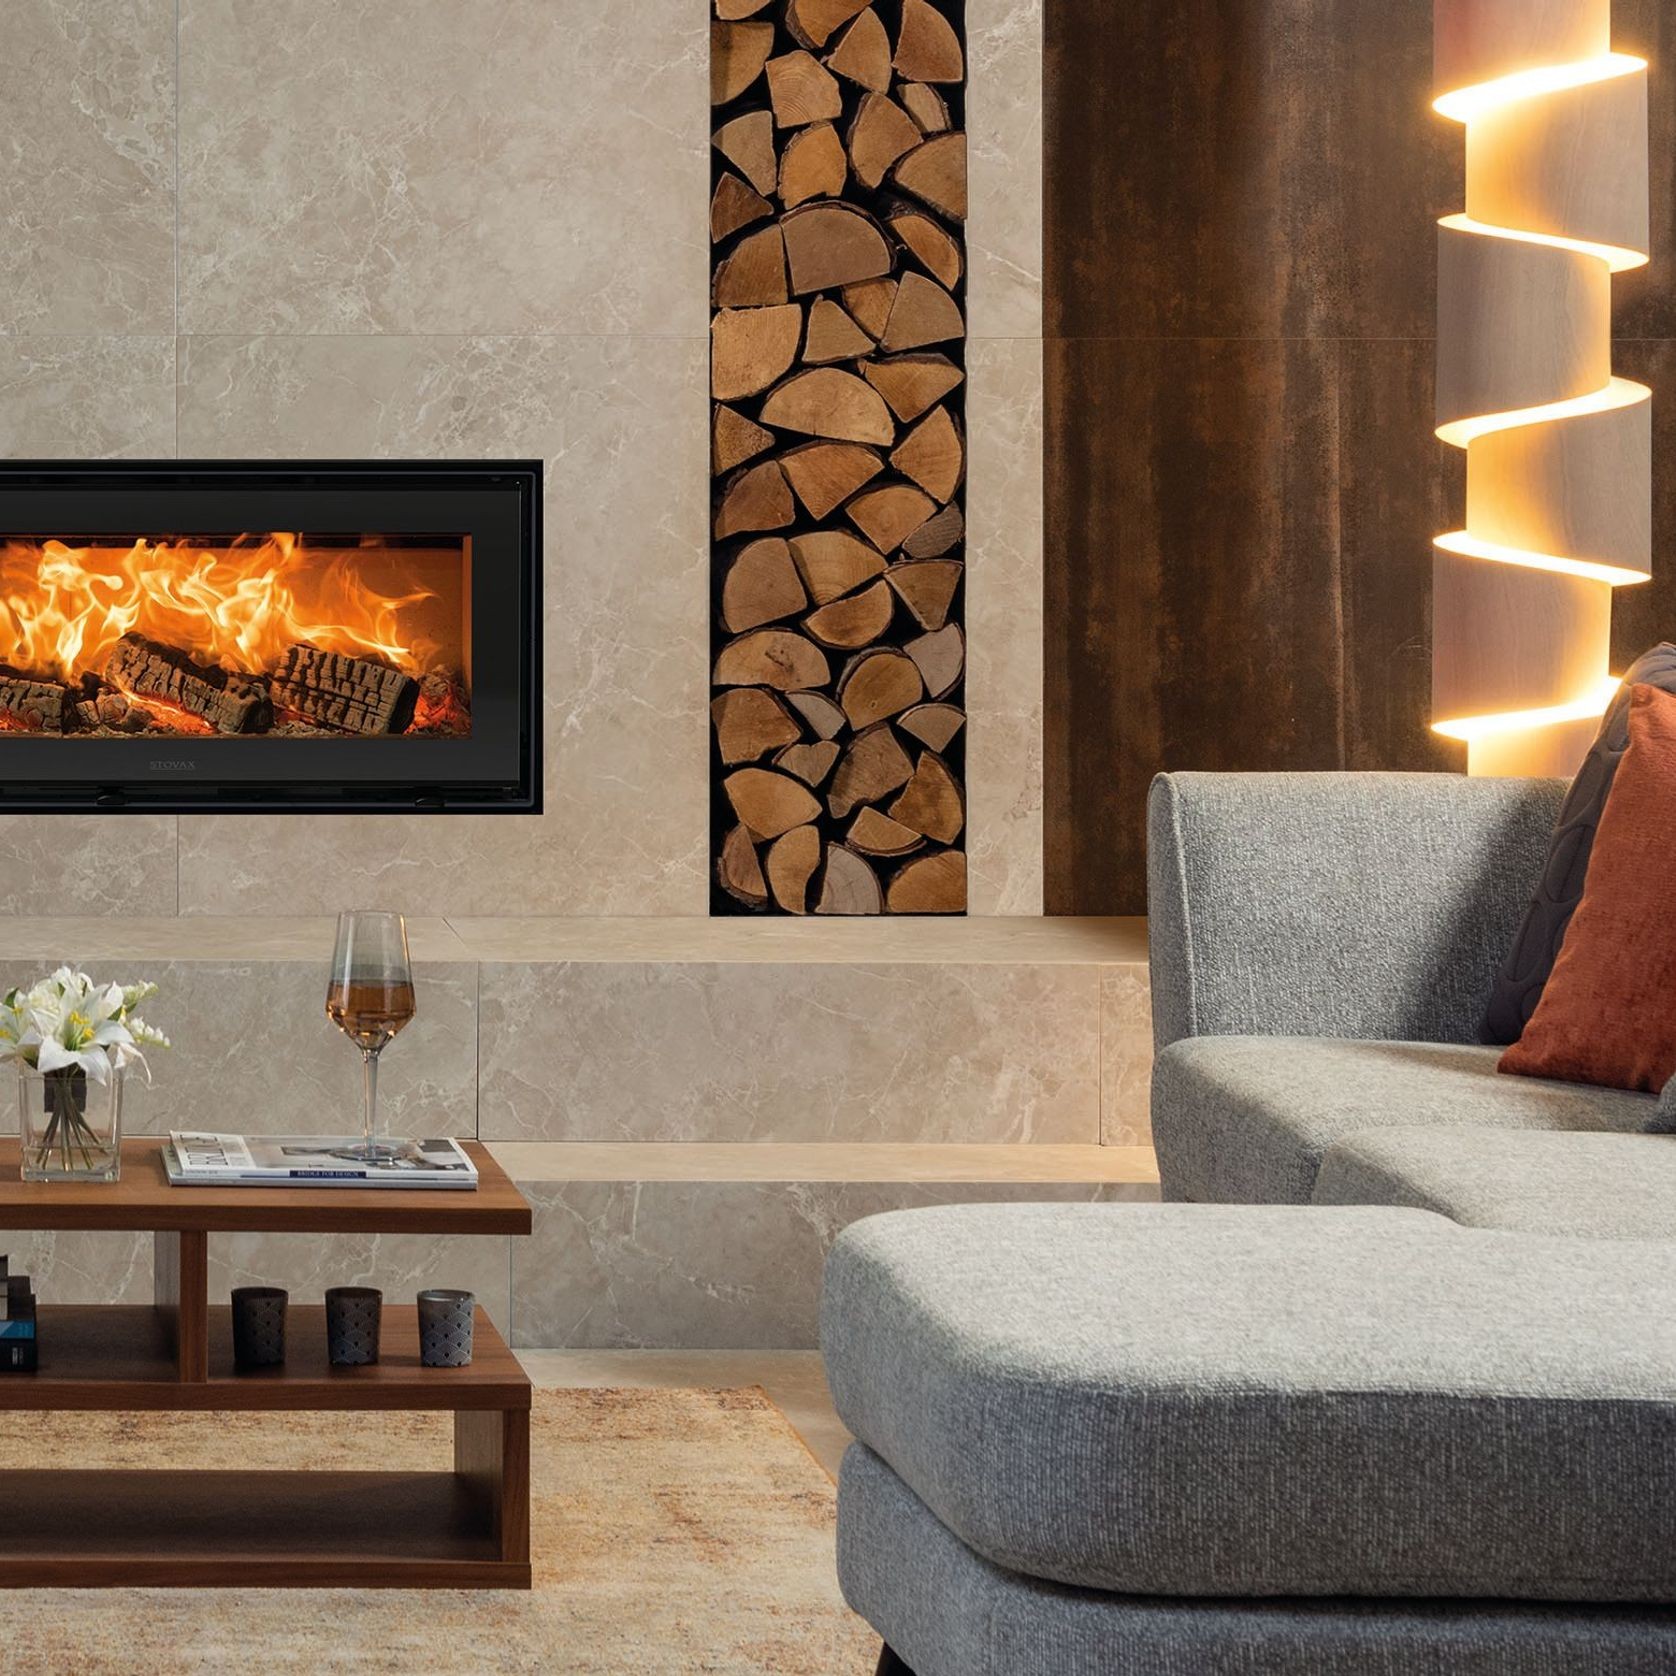 Stovax Studio 2 Air Inbuilt & Freestanding Fireplace gallery detail image